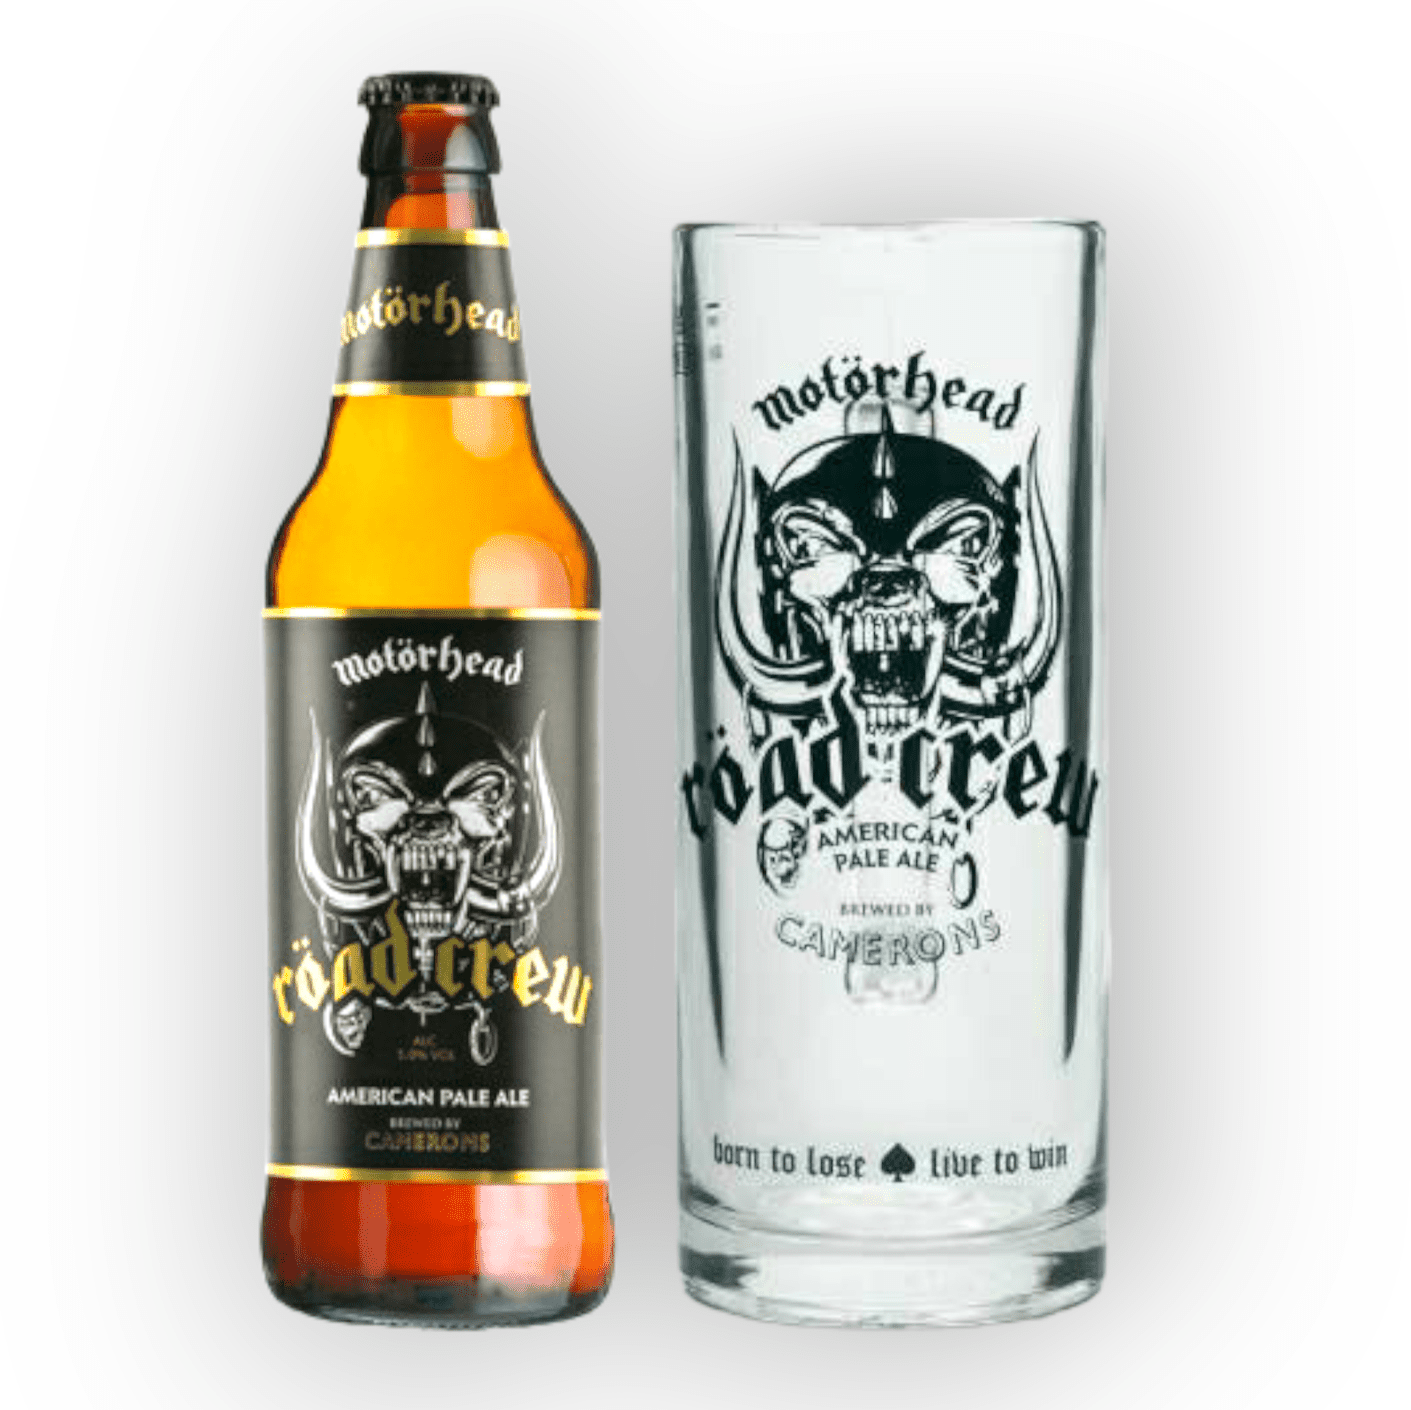 Motörhead Röad Crew Pale Ale 0,33l + Original Motörhead 0,5l Bierkrug - American Pale Ale Camerons